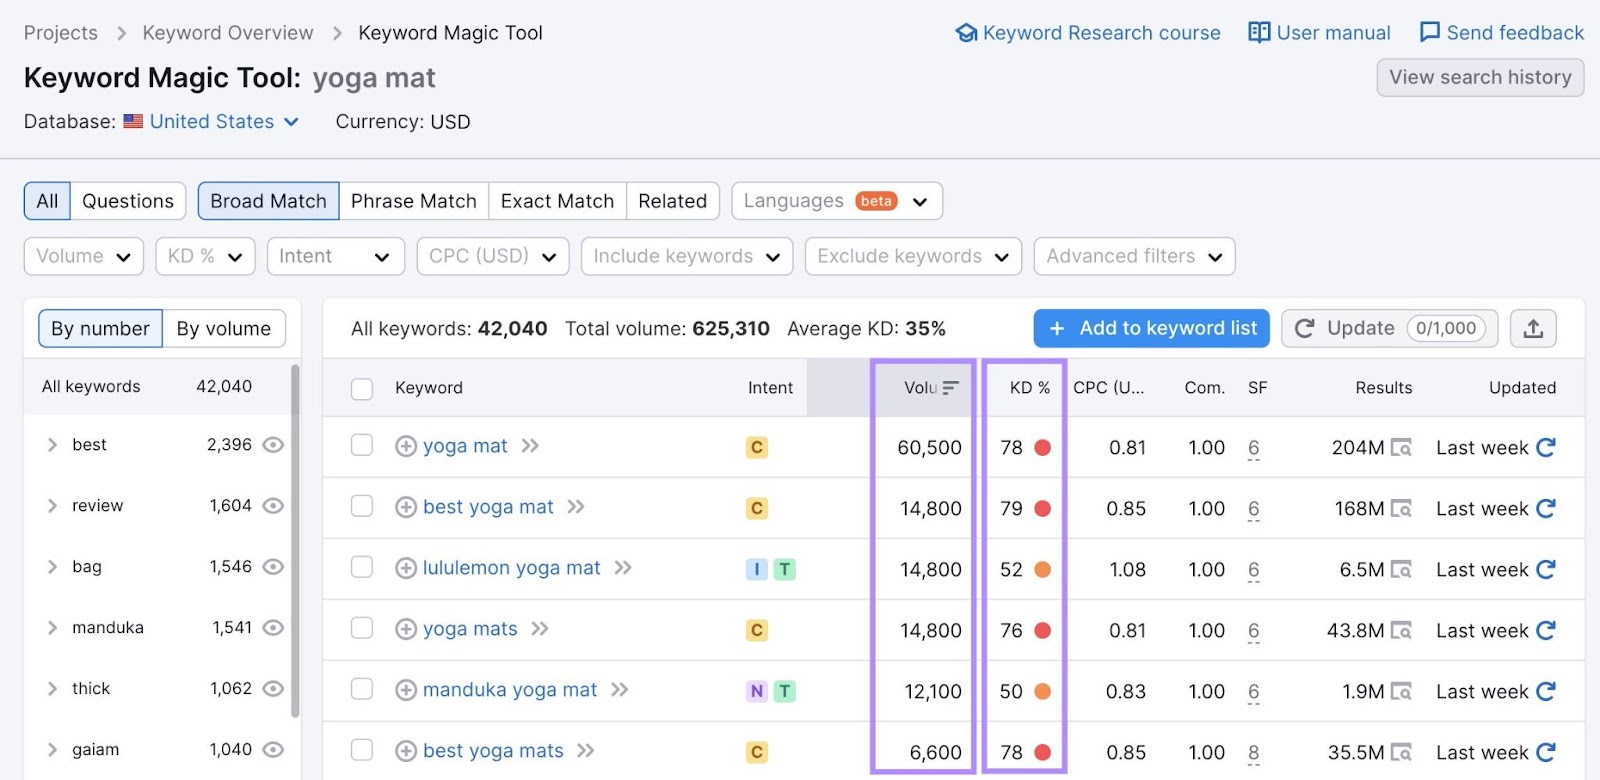 Keyword Magic Tool results for "yoga mat" keyword